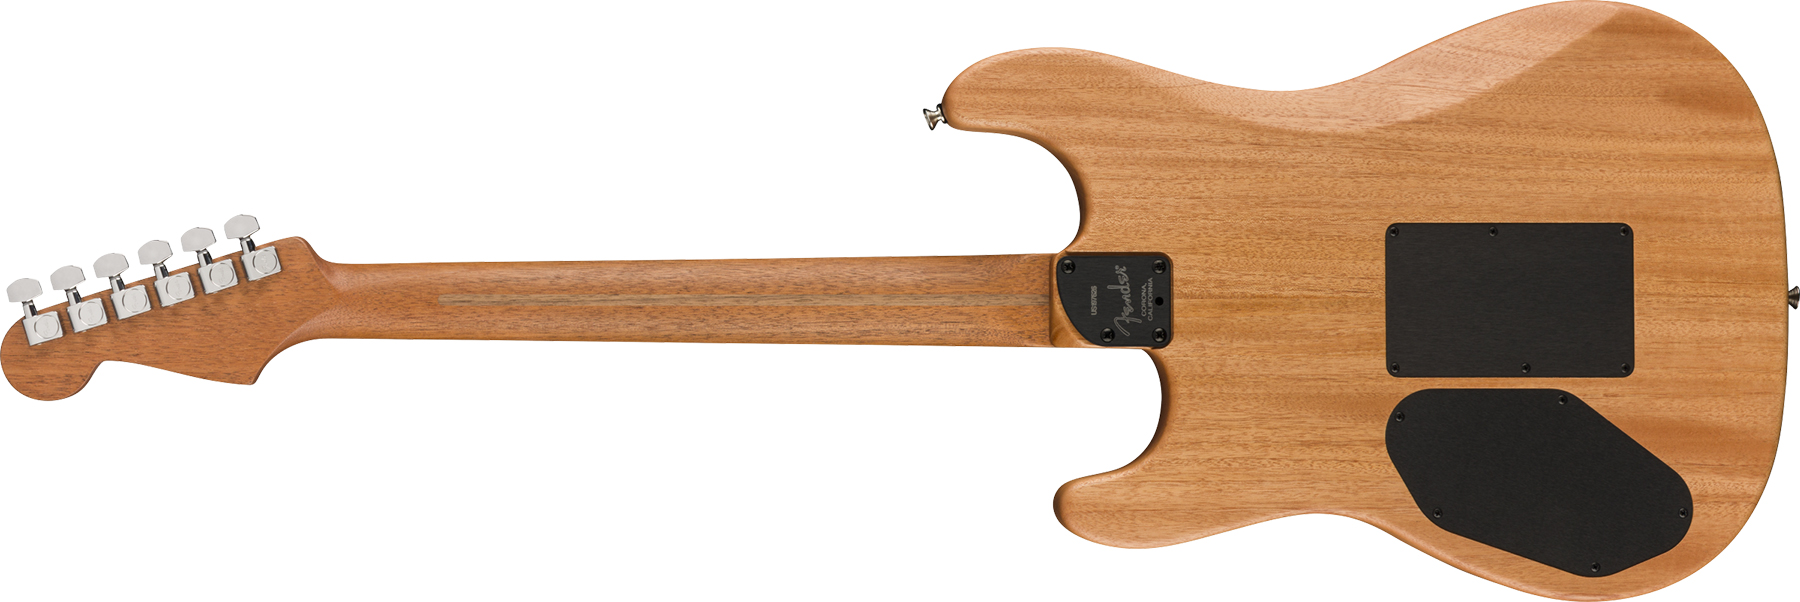 Fender Strat American Acoustasonic Usa Eb - Black - Electro acoustic guitar - Variation 1